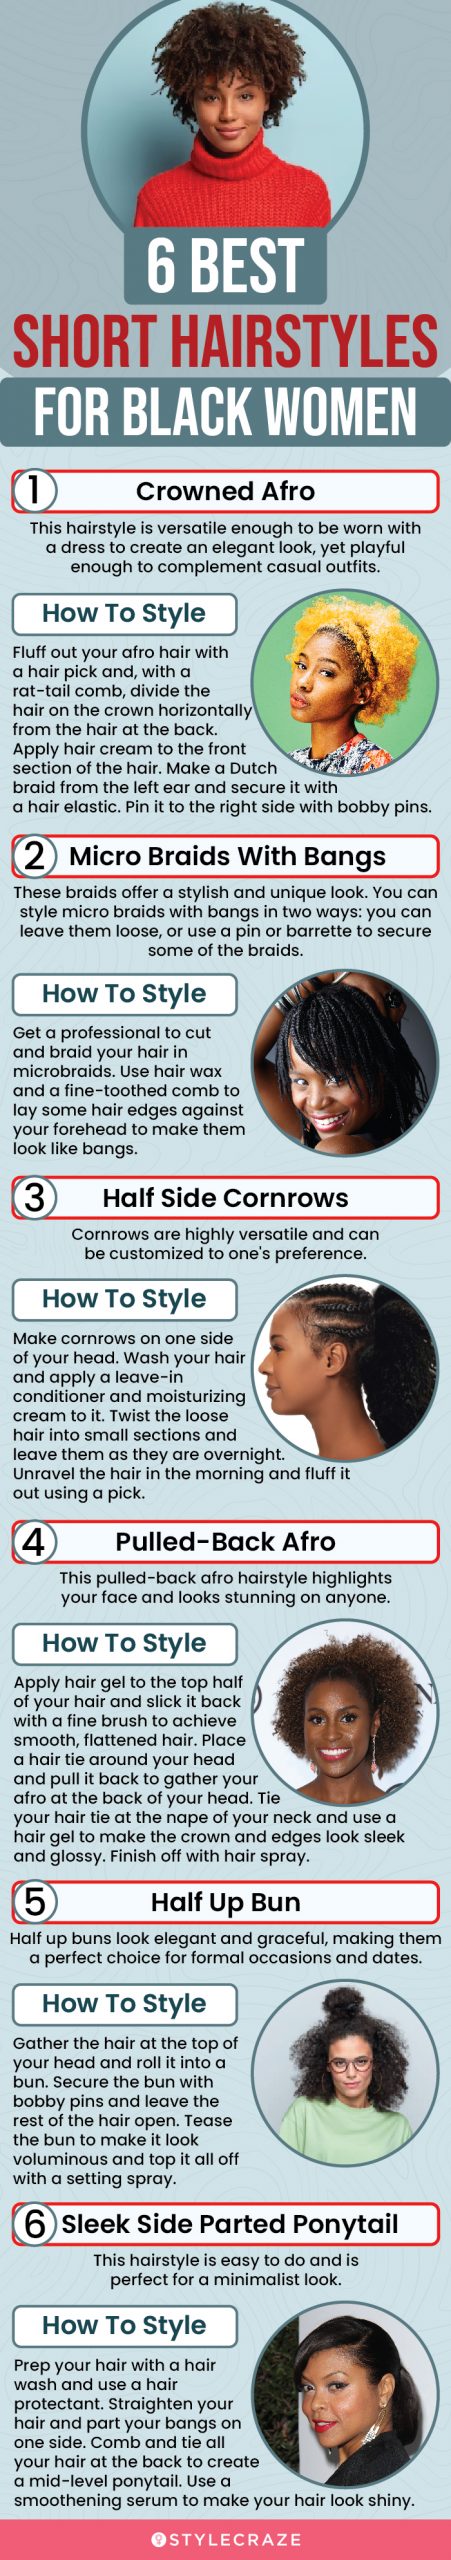 Best Short Hairstyles for Black Women